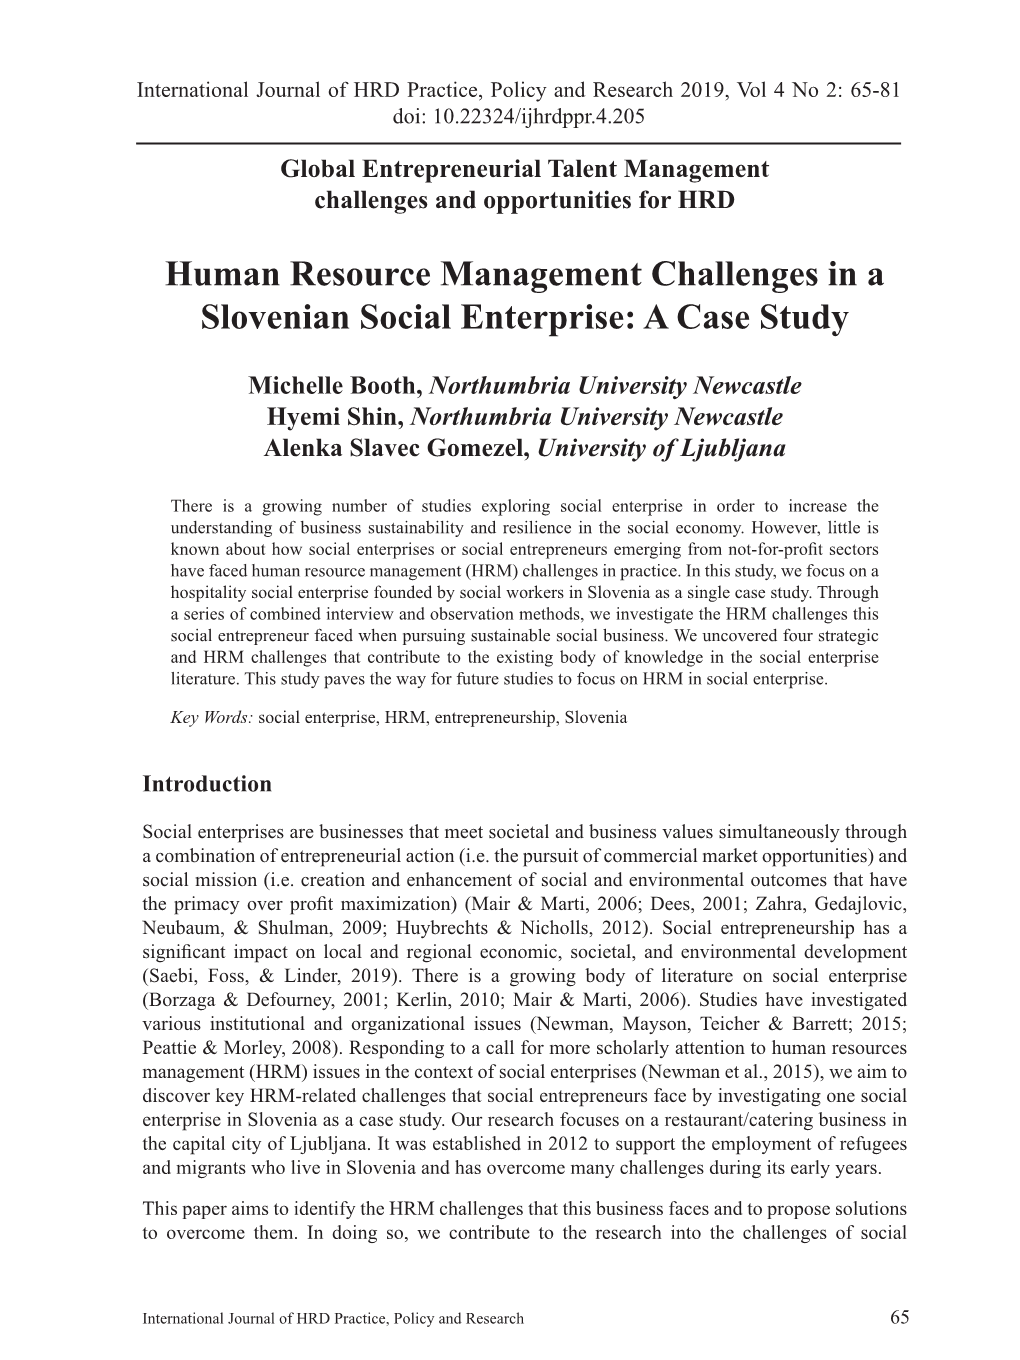 Human Resource Management Challenges in a Slovenian Social Enterprise: a Case Study